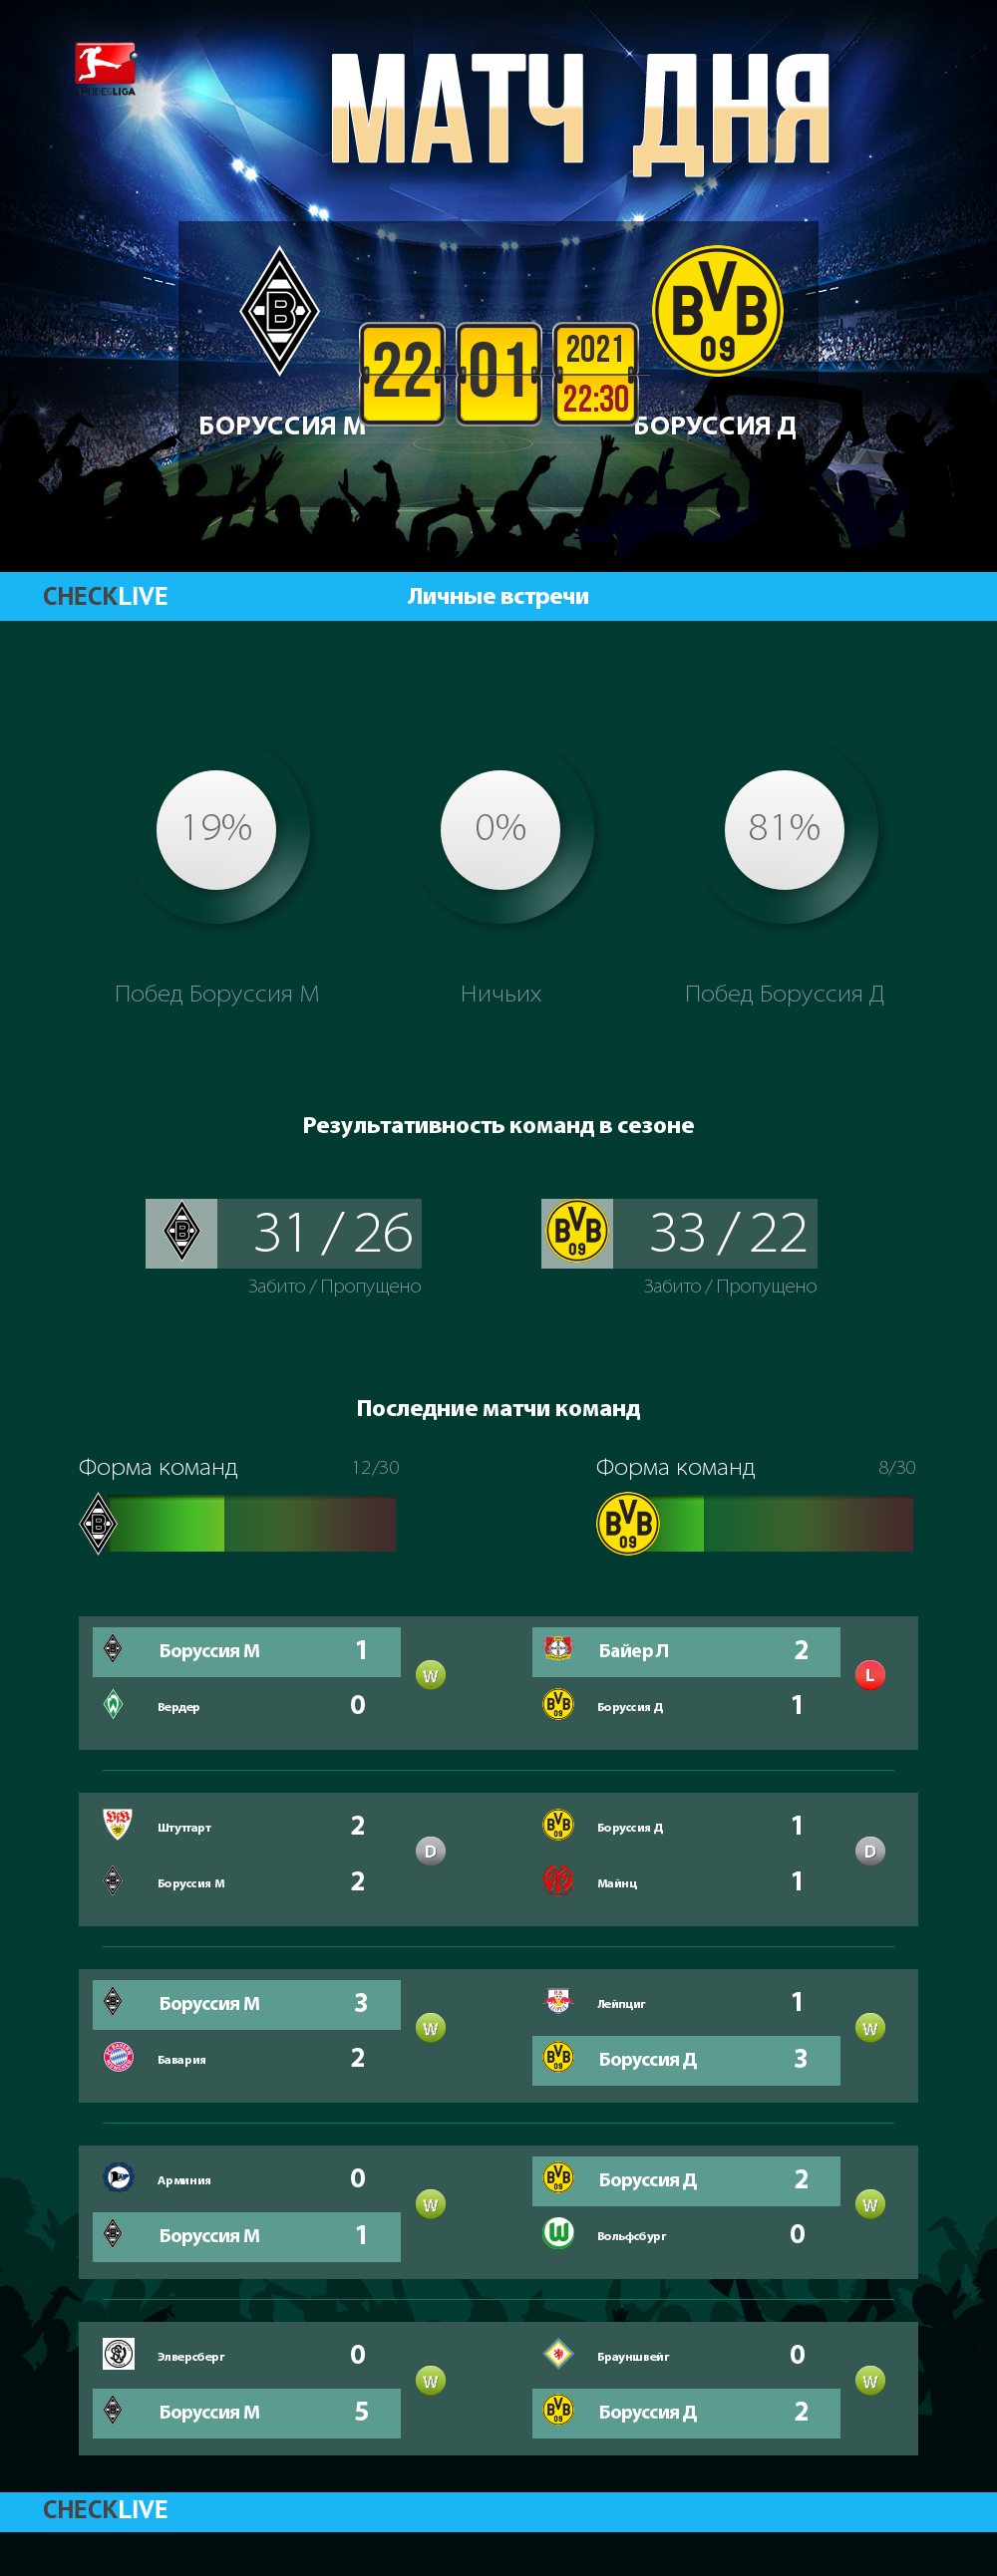 Инфографика Боруссия М и Боруссия Д матч дня 22.01.2021